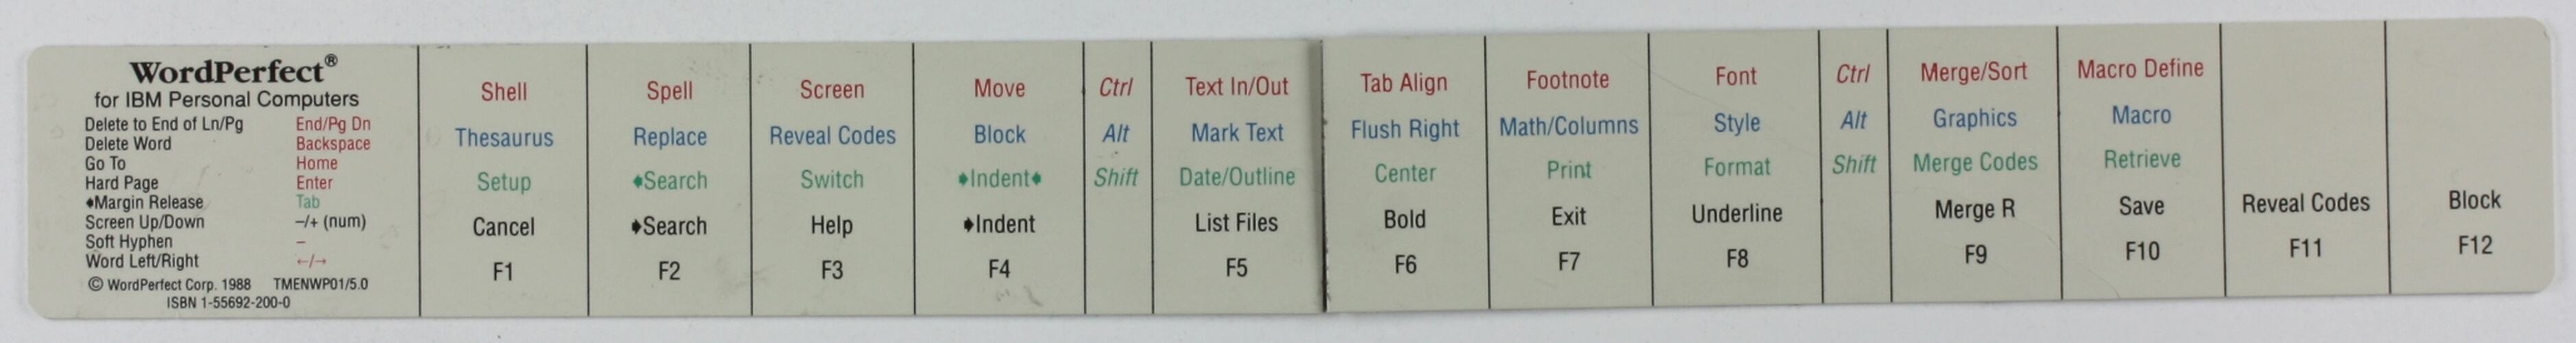 Function Key Guide - IBM, WordPerfect, 1988